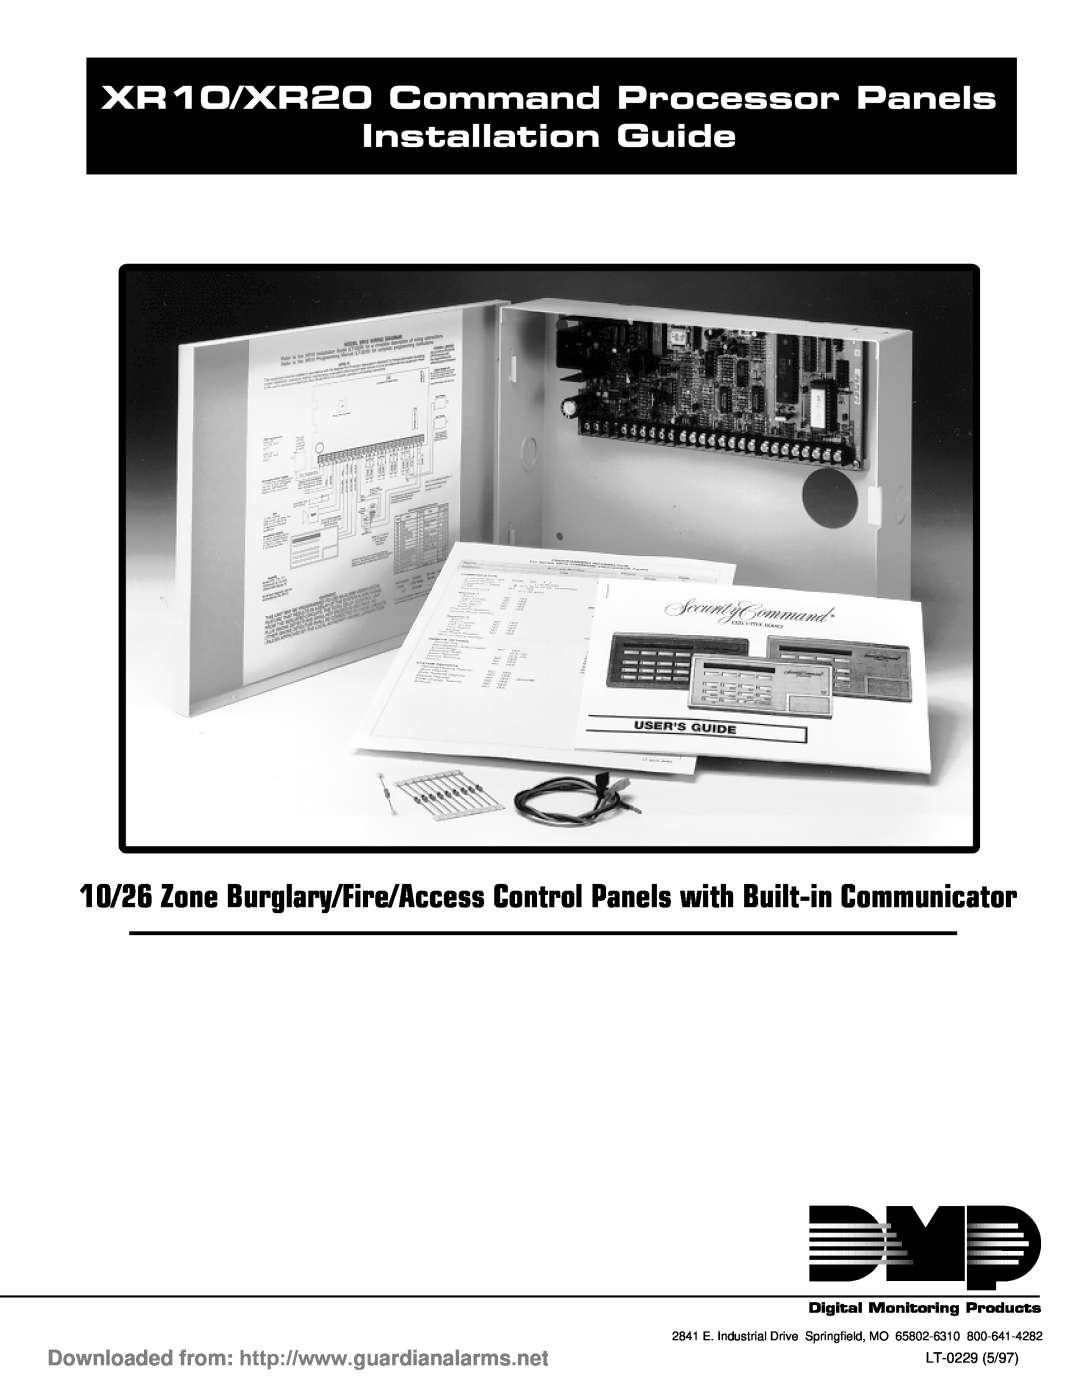 DMP Electronics LT-0229 (5 97) manual XR10/XR20 Command Processor Panels, Installation Guide, LT-02295/97 